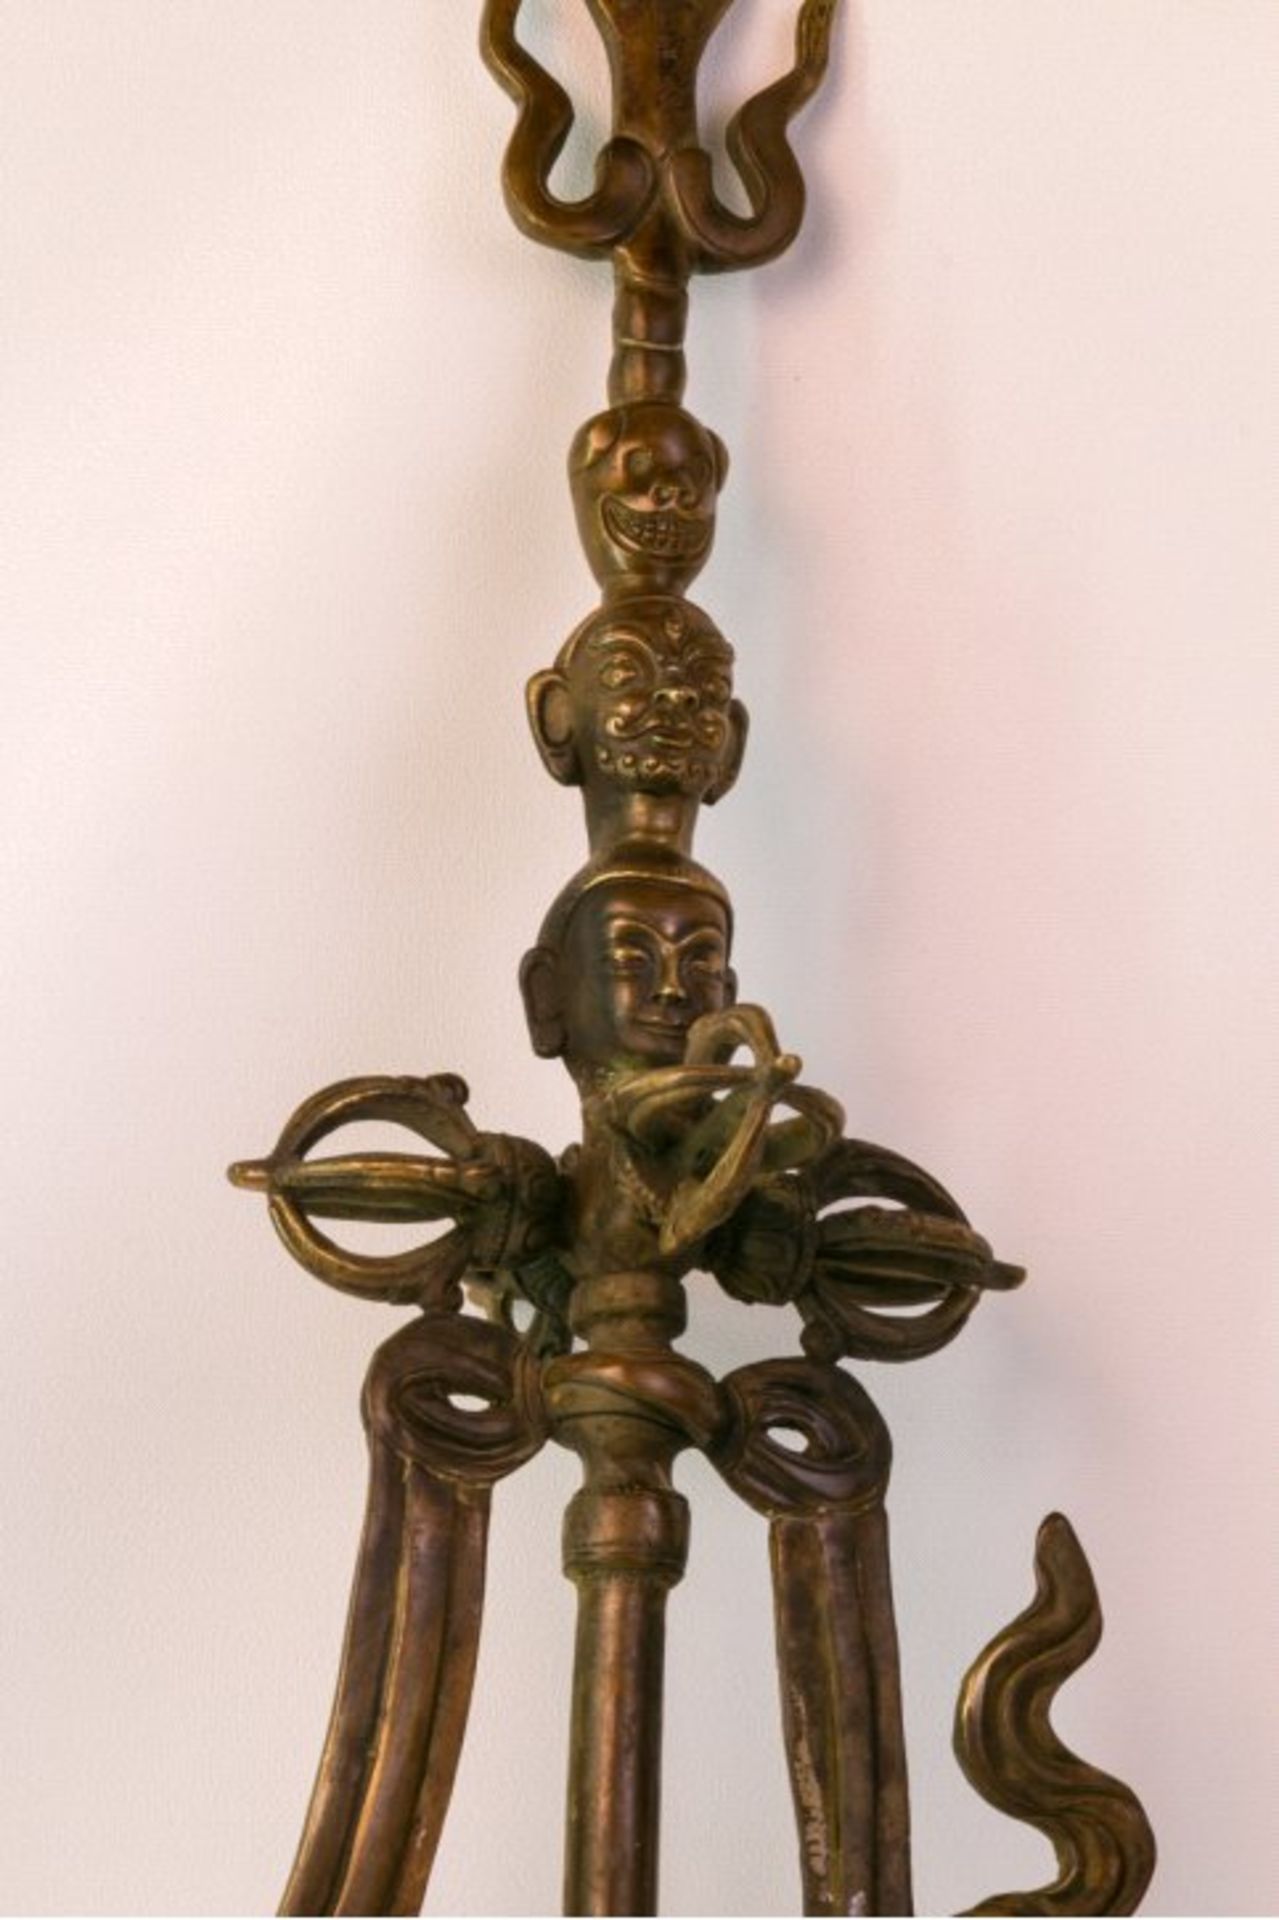 Magischer Zepterstab (Khatvanga).Tibet oder Mongolei 18./19. Jh. Bronzestab, symbolisiertStrafgewalt - Bild 2 aus 5